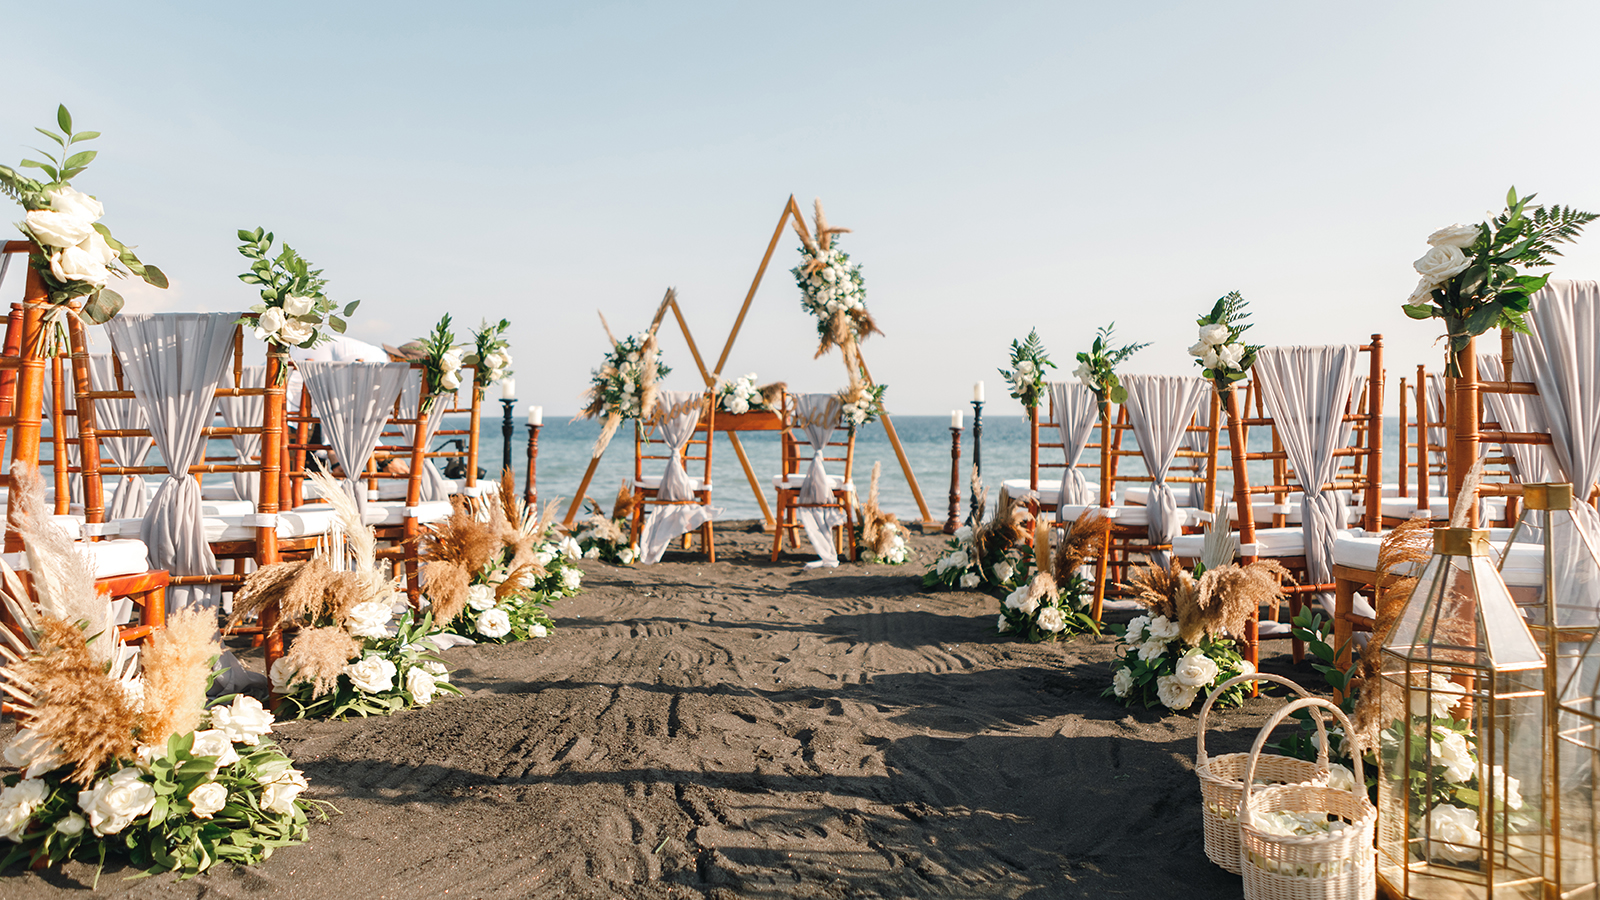 Triangular wedding arch by the sea ready for the ceremony. Wedding ceremony setup on black sand beach